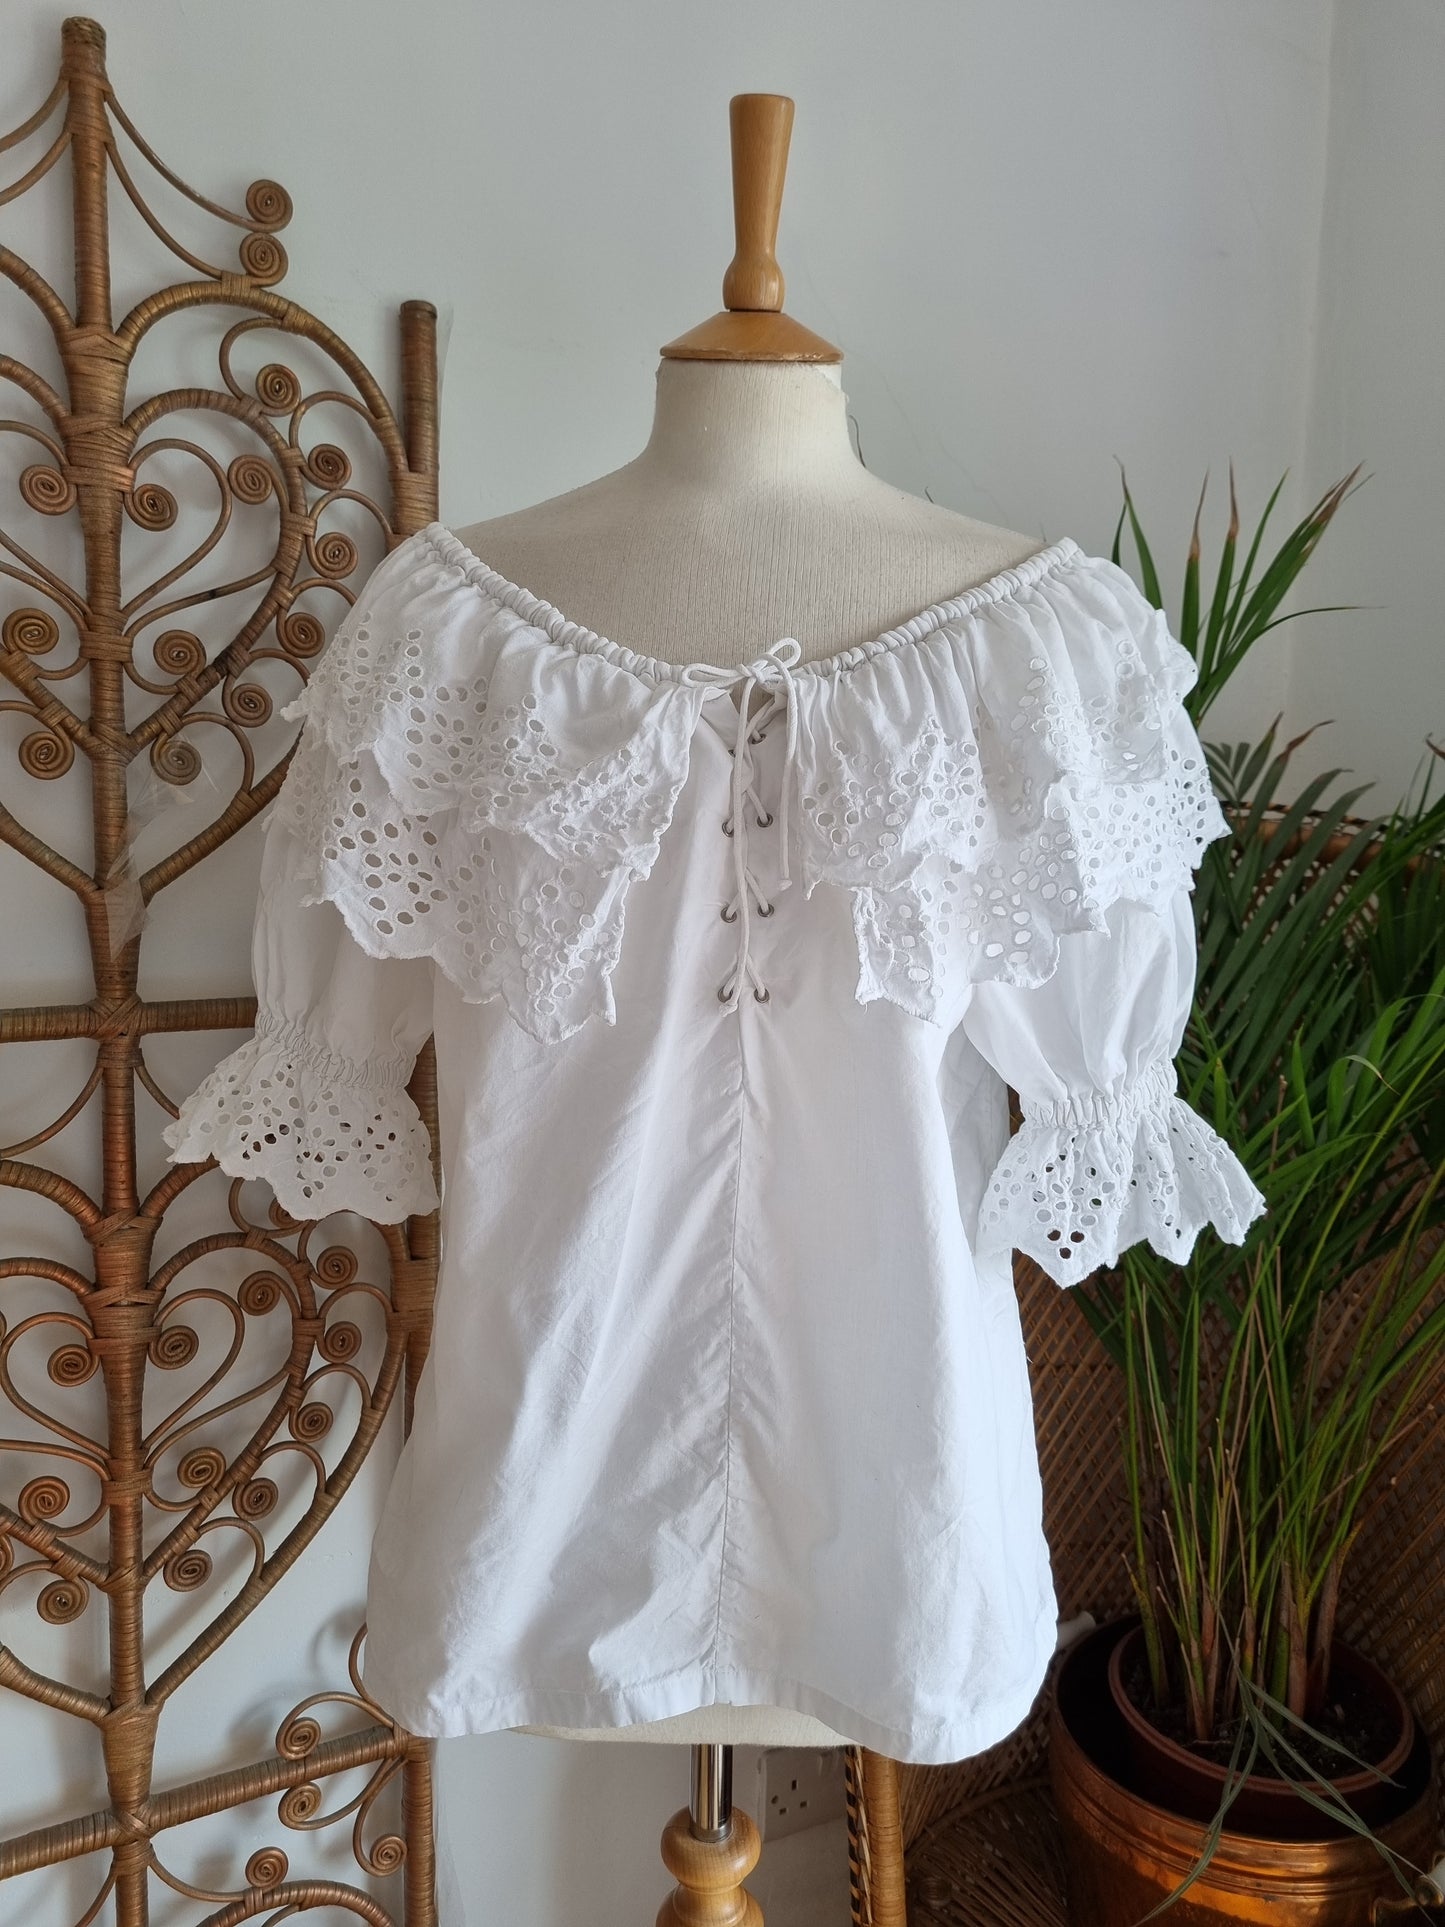 Vintage embroidery anglaise prairie blouse